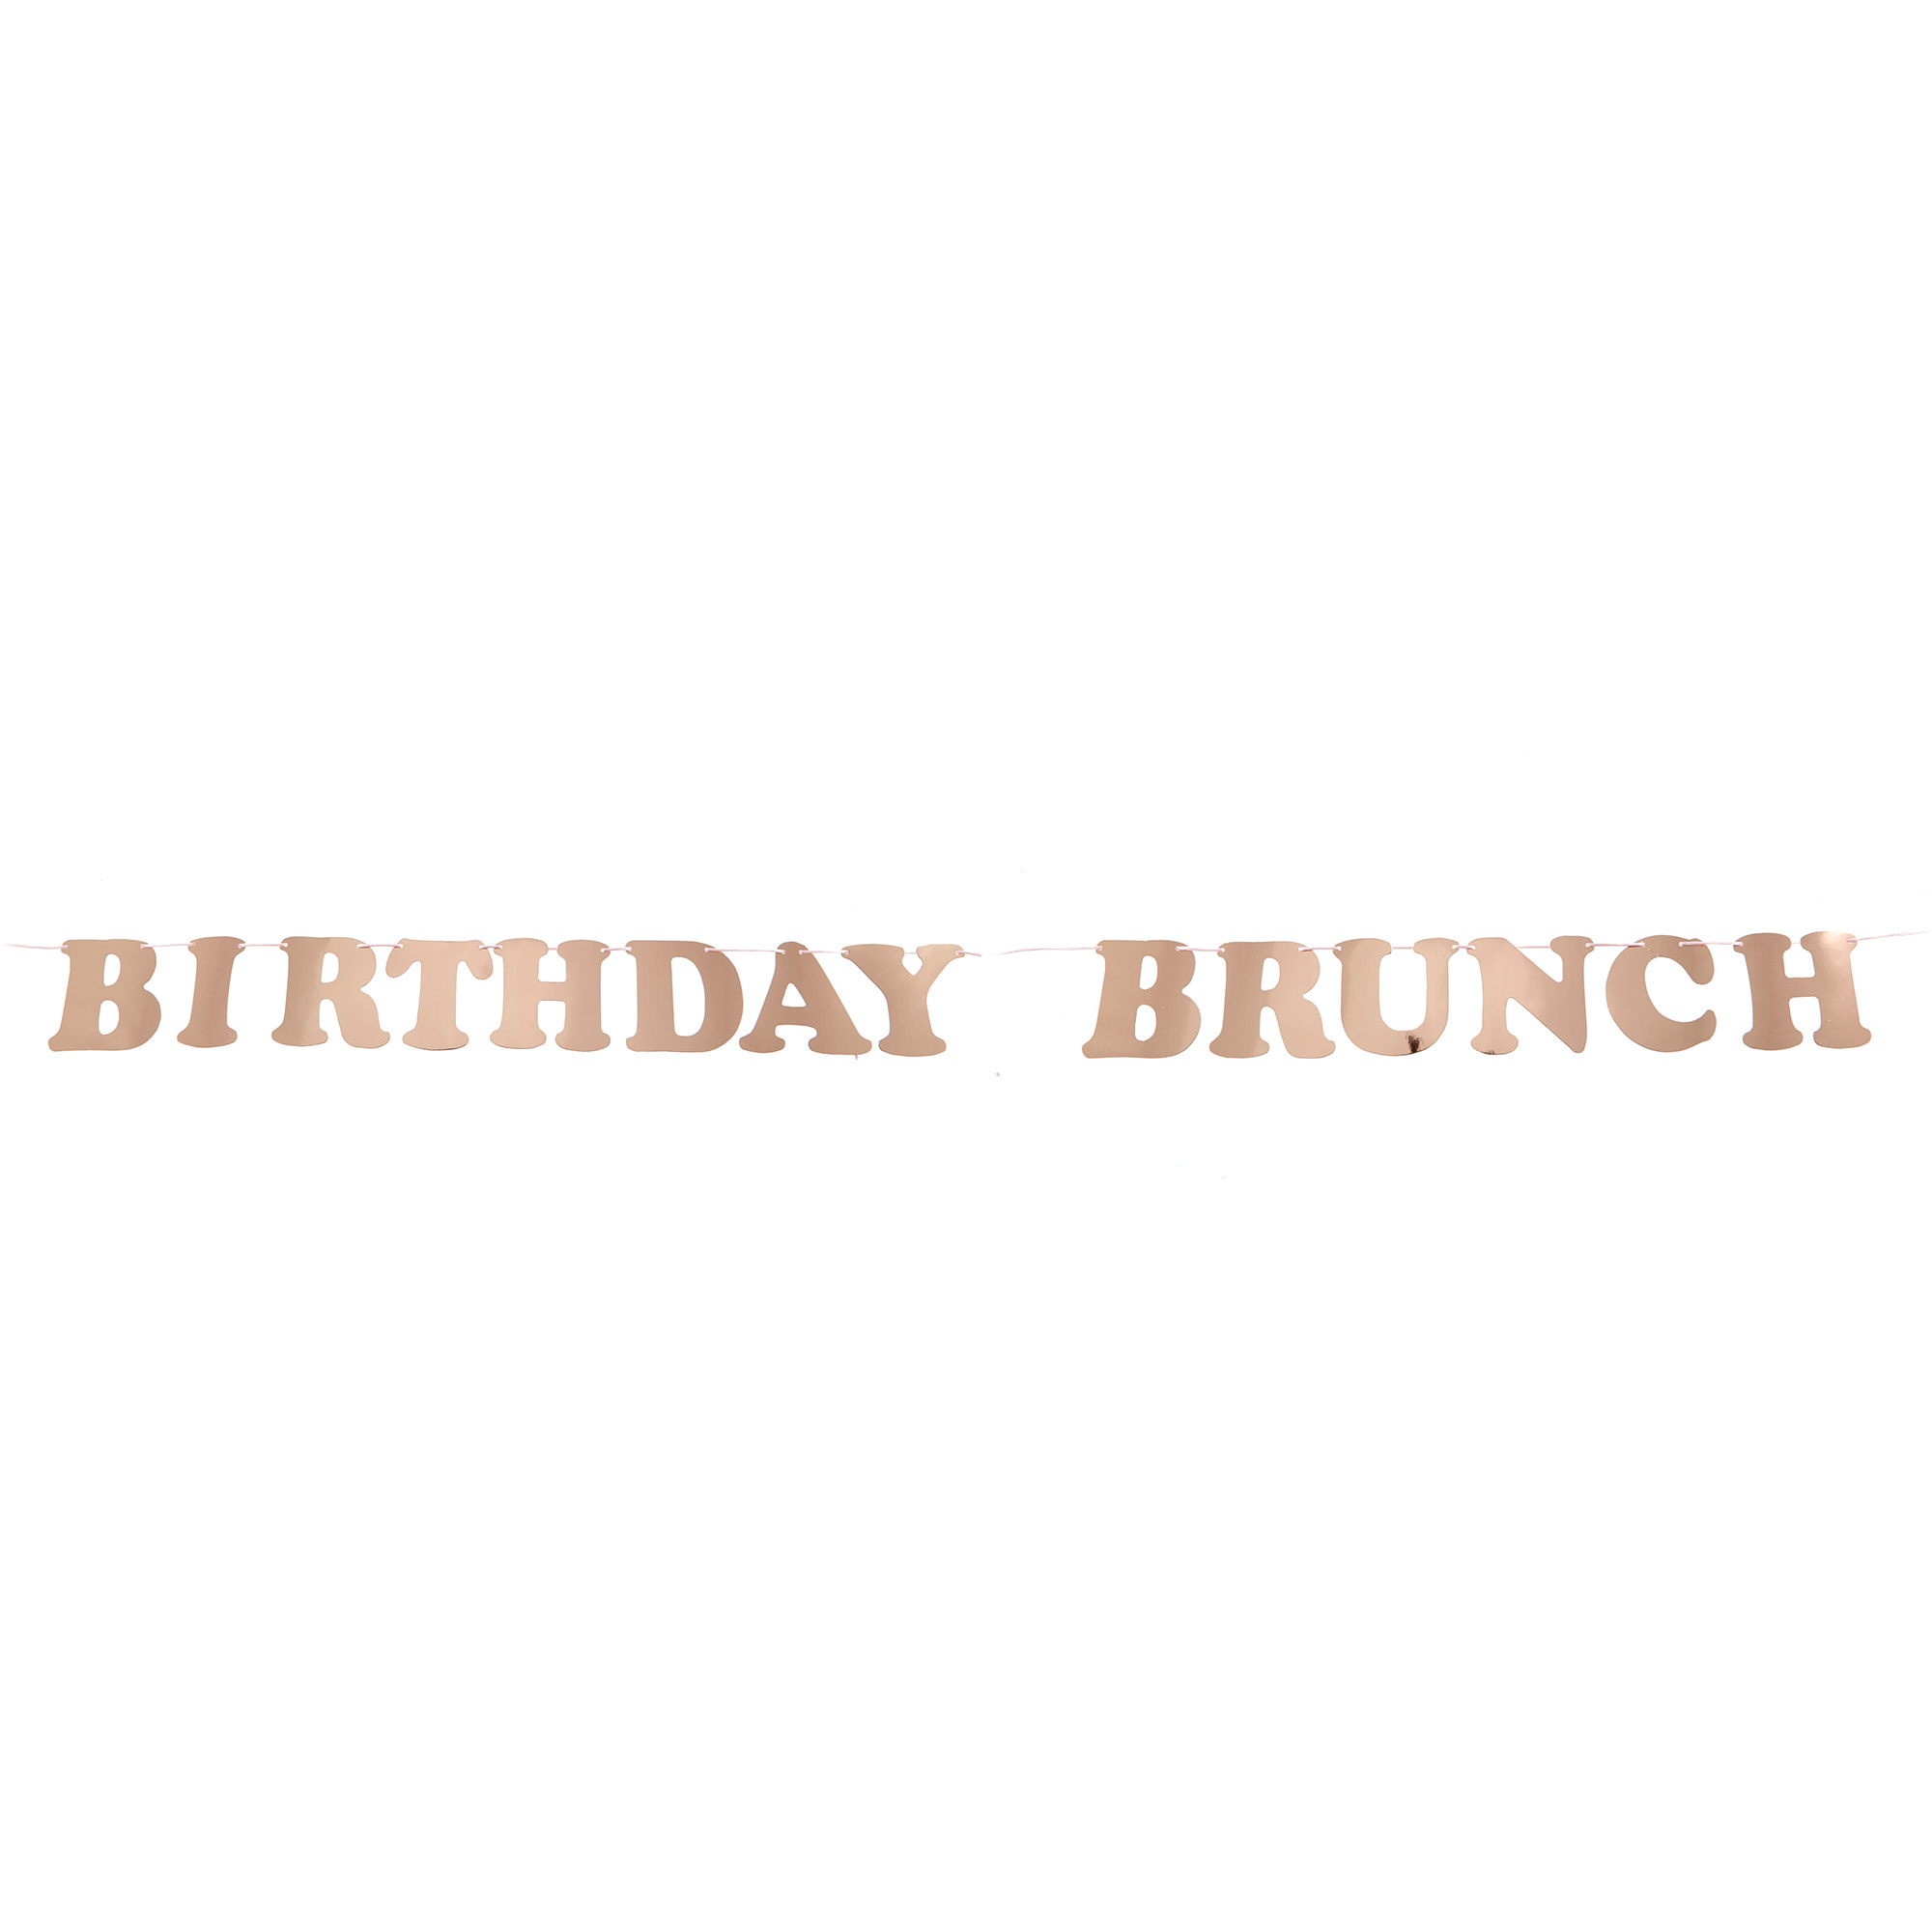 Birthday Brunch Party Accessories Bundle - 20 Pieces 